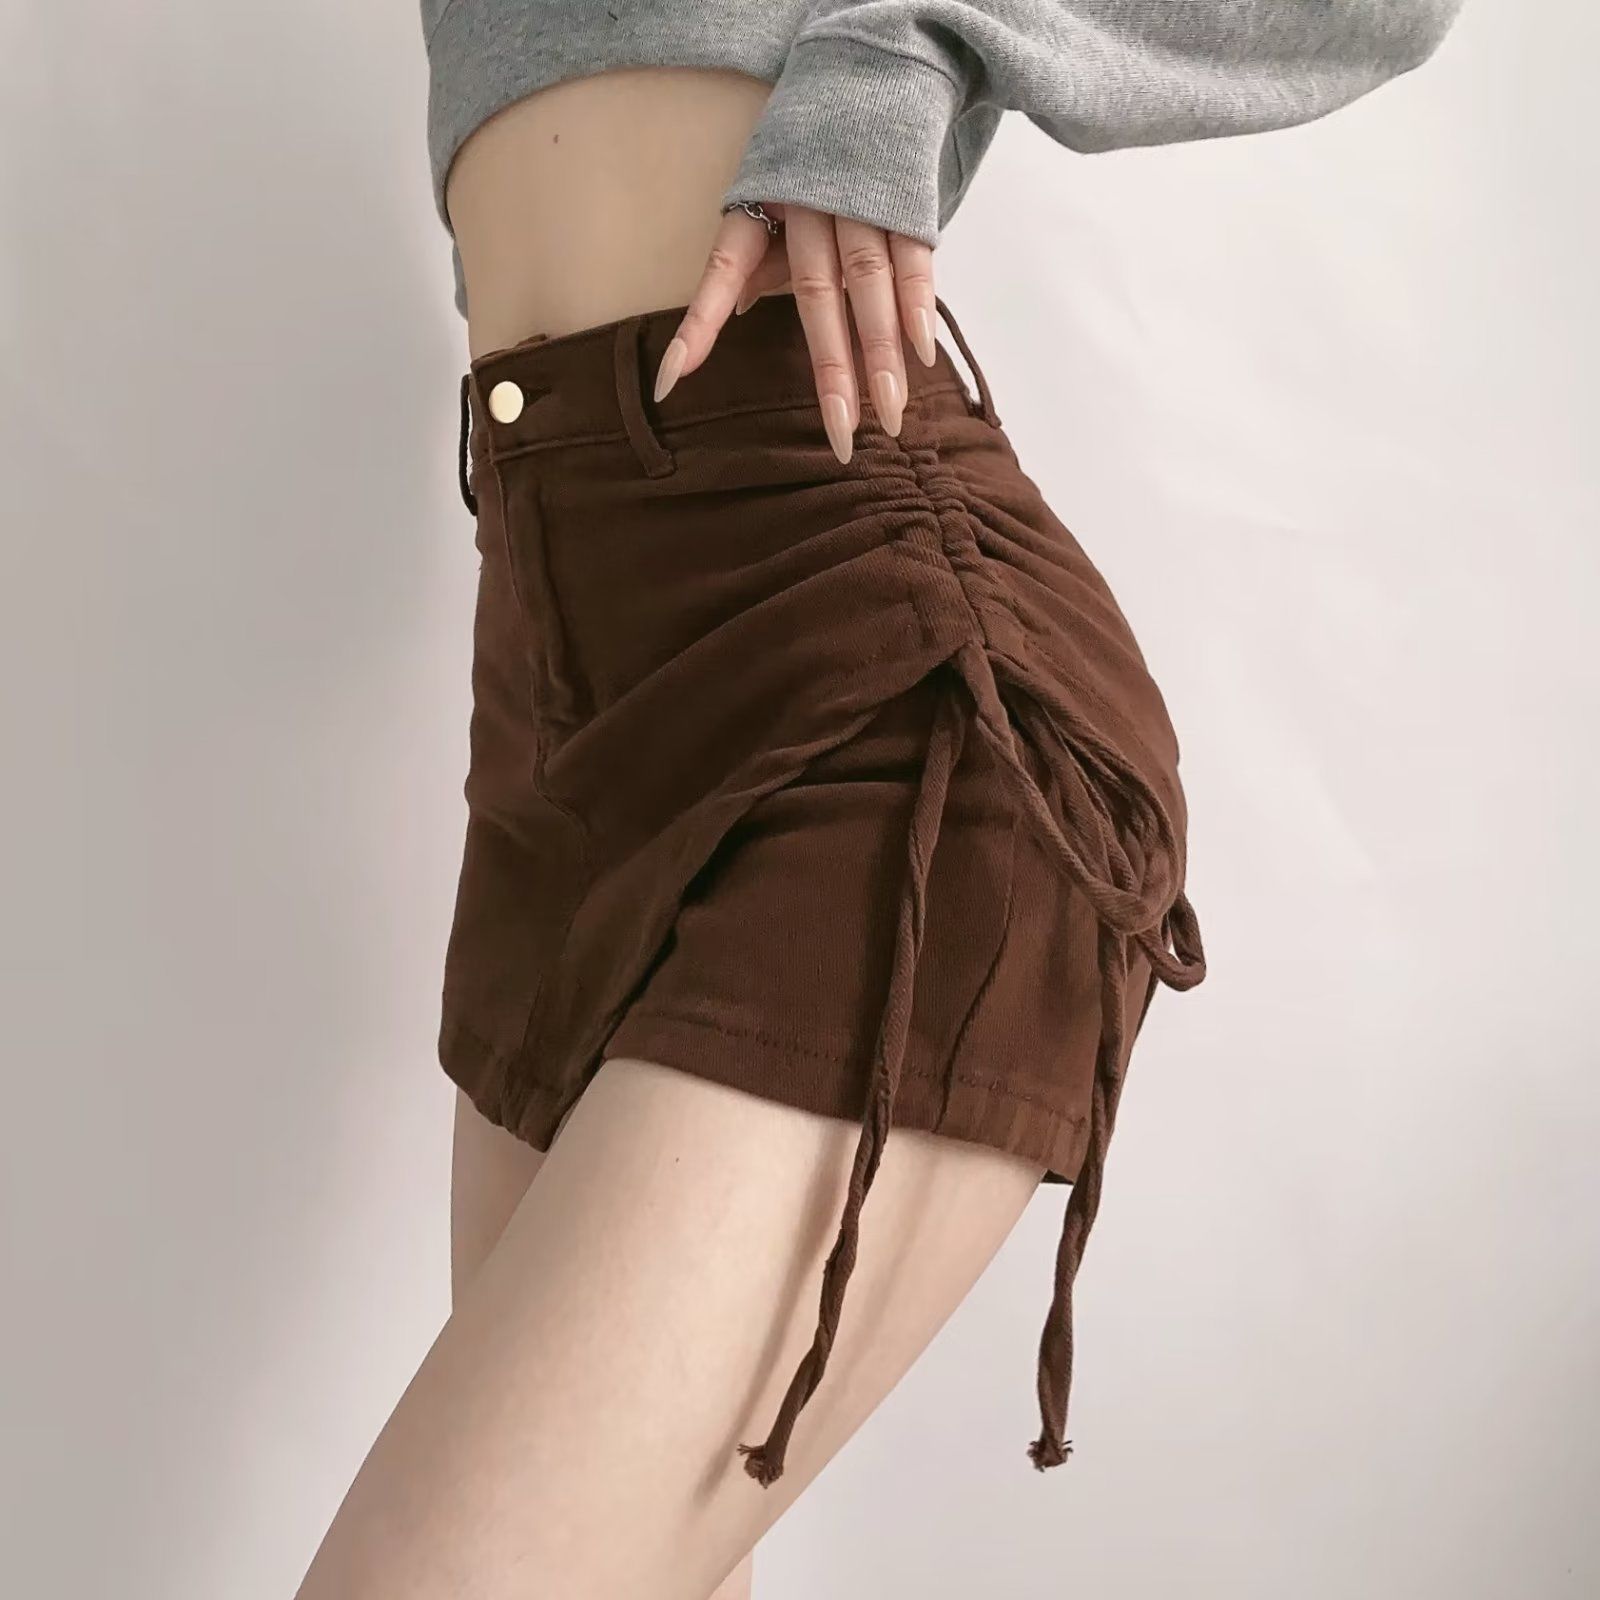 American hot girl style design sense side drawstring slimming high waist bag hip culottes autumn irregular elastic shorts trendy